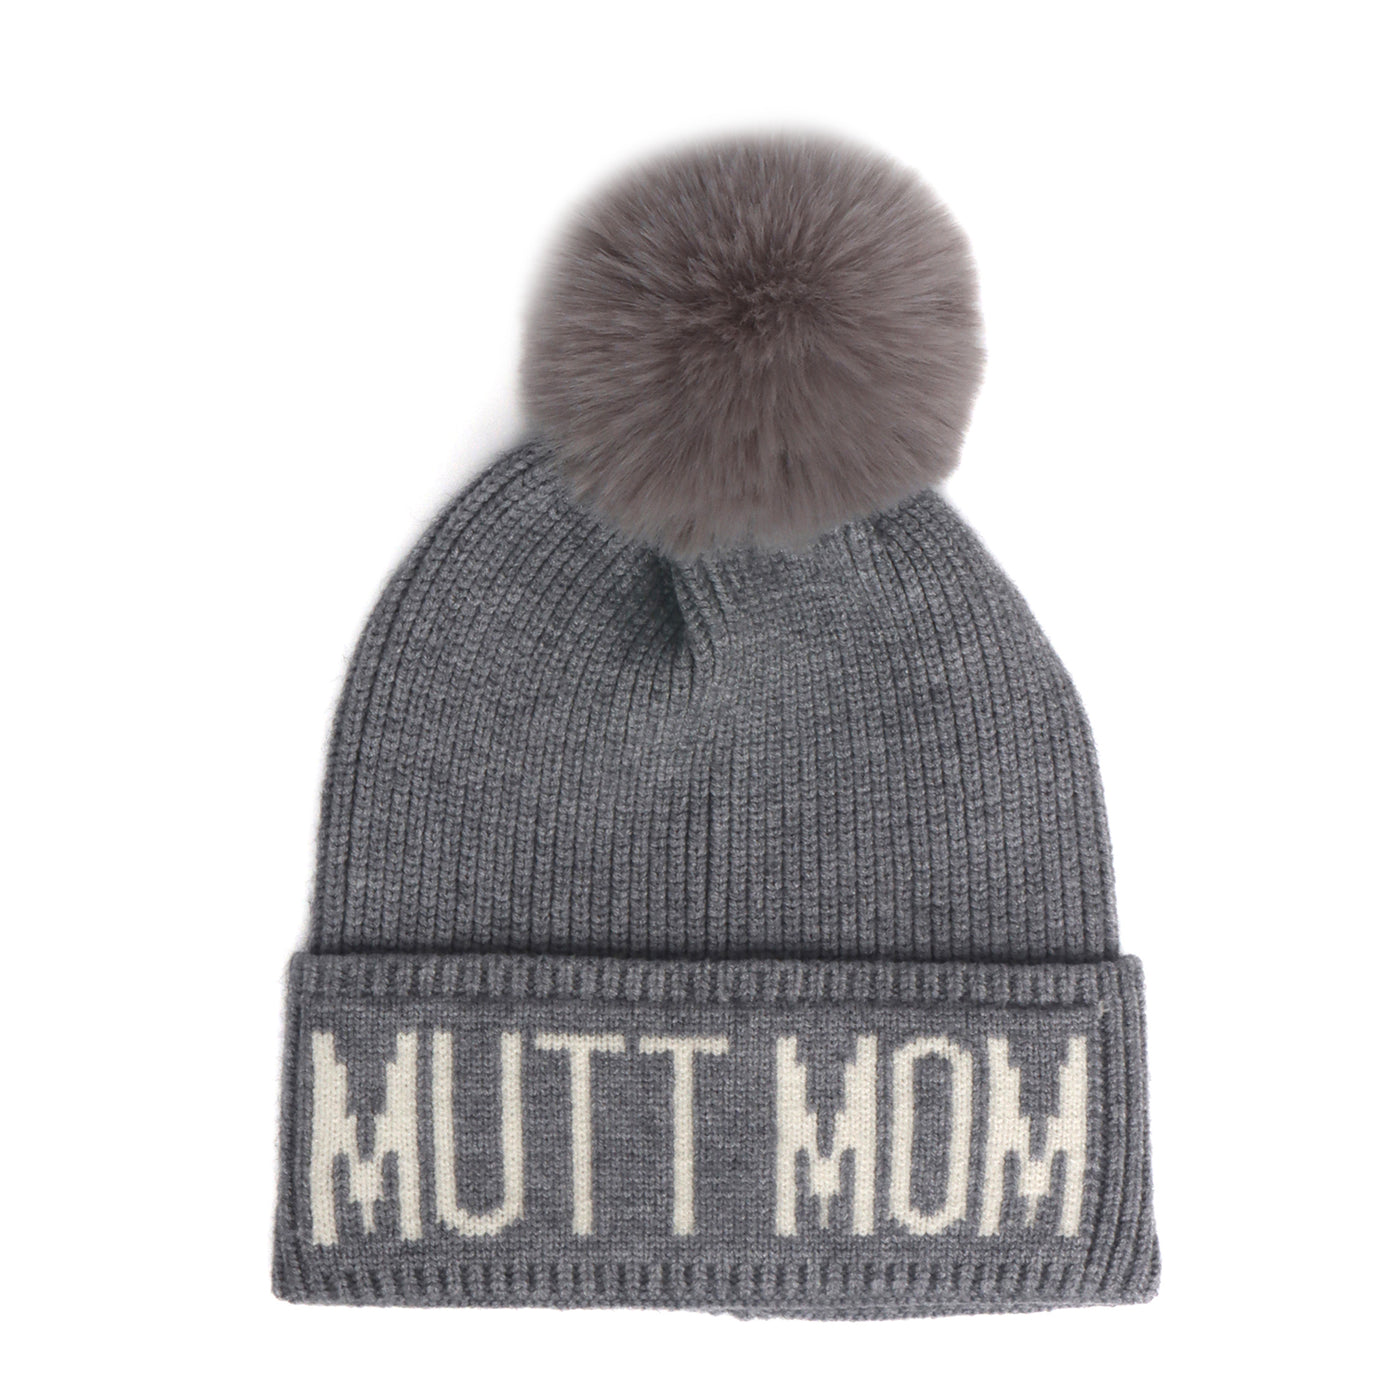 Hatphile Mutt Mom Pompom Knit Beanie Toque